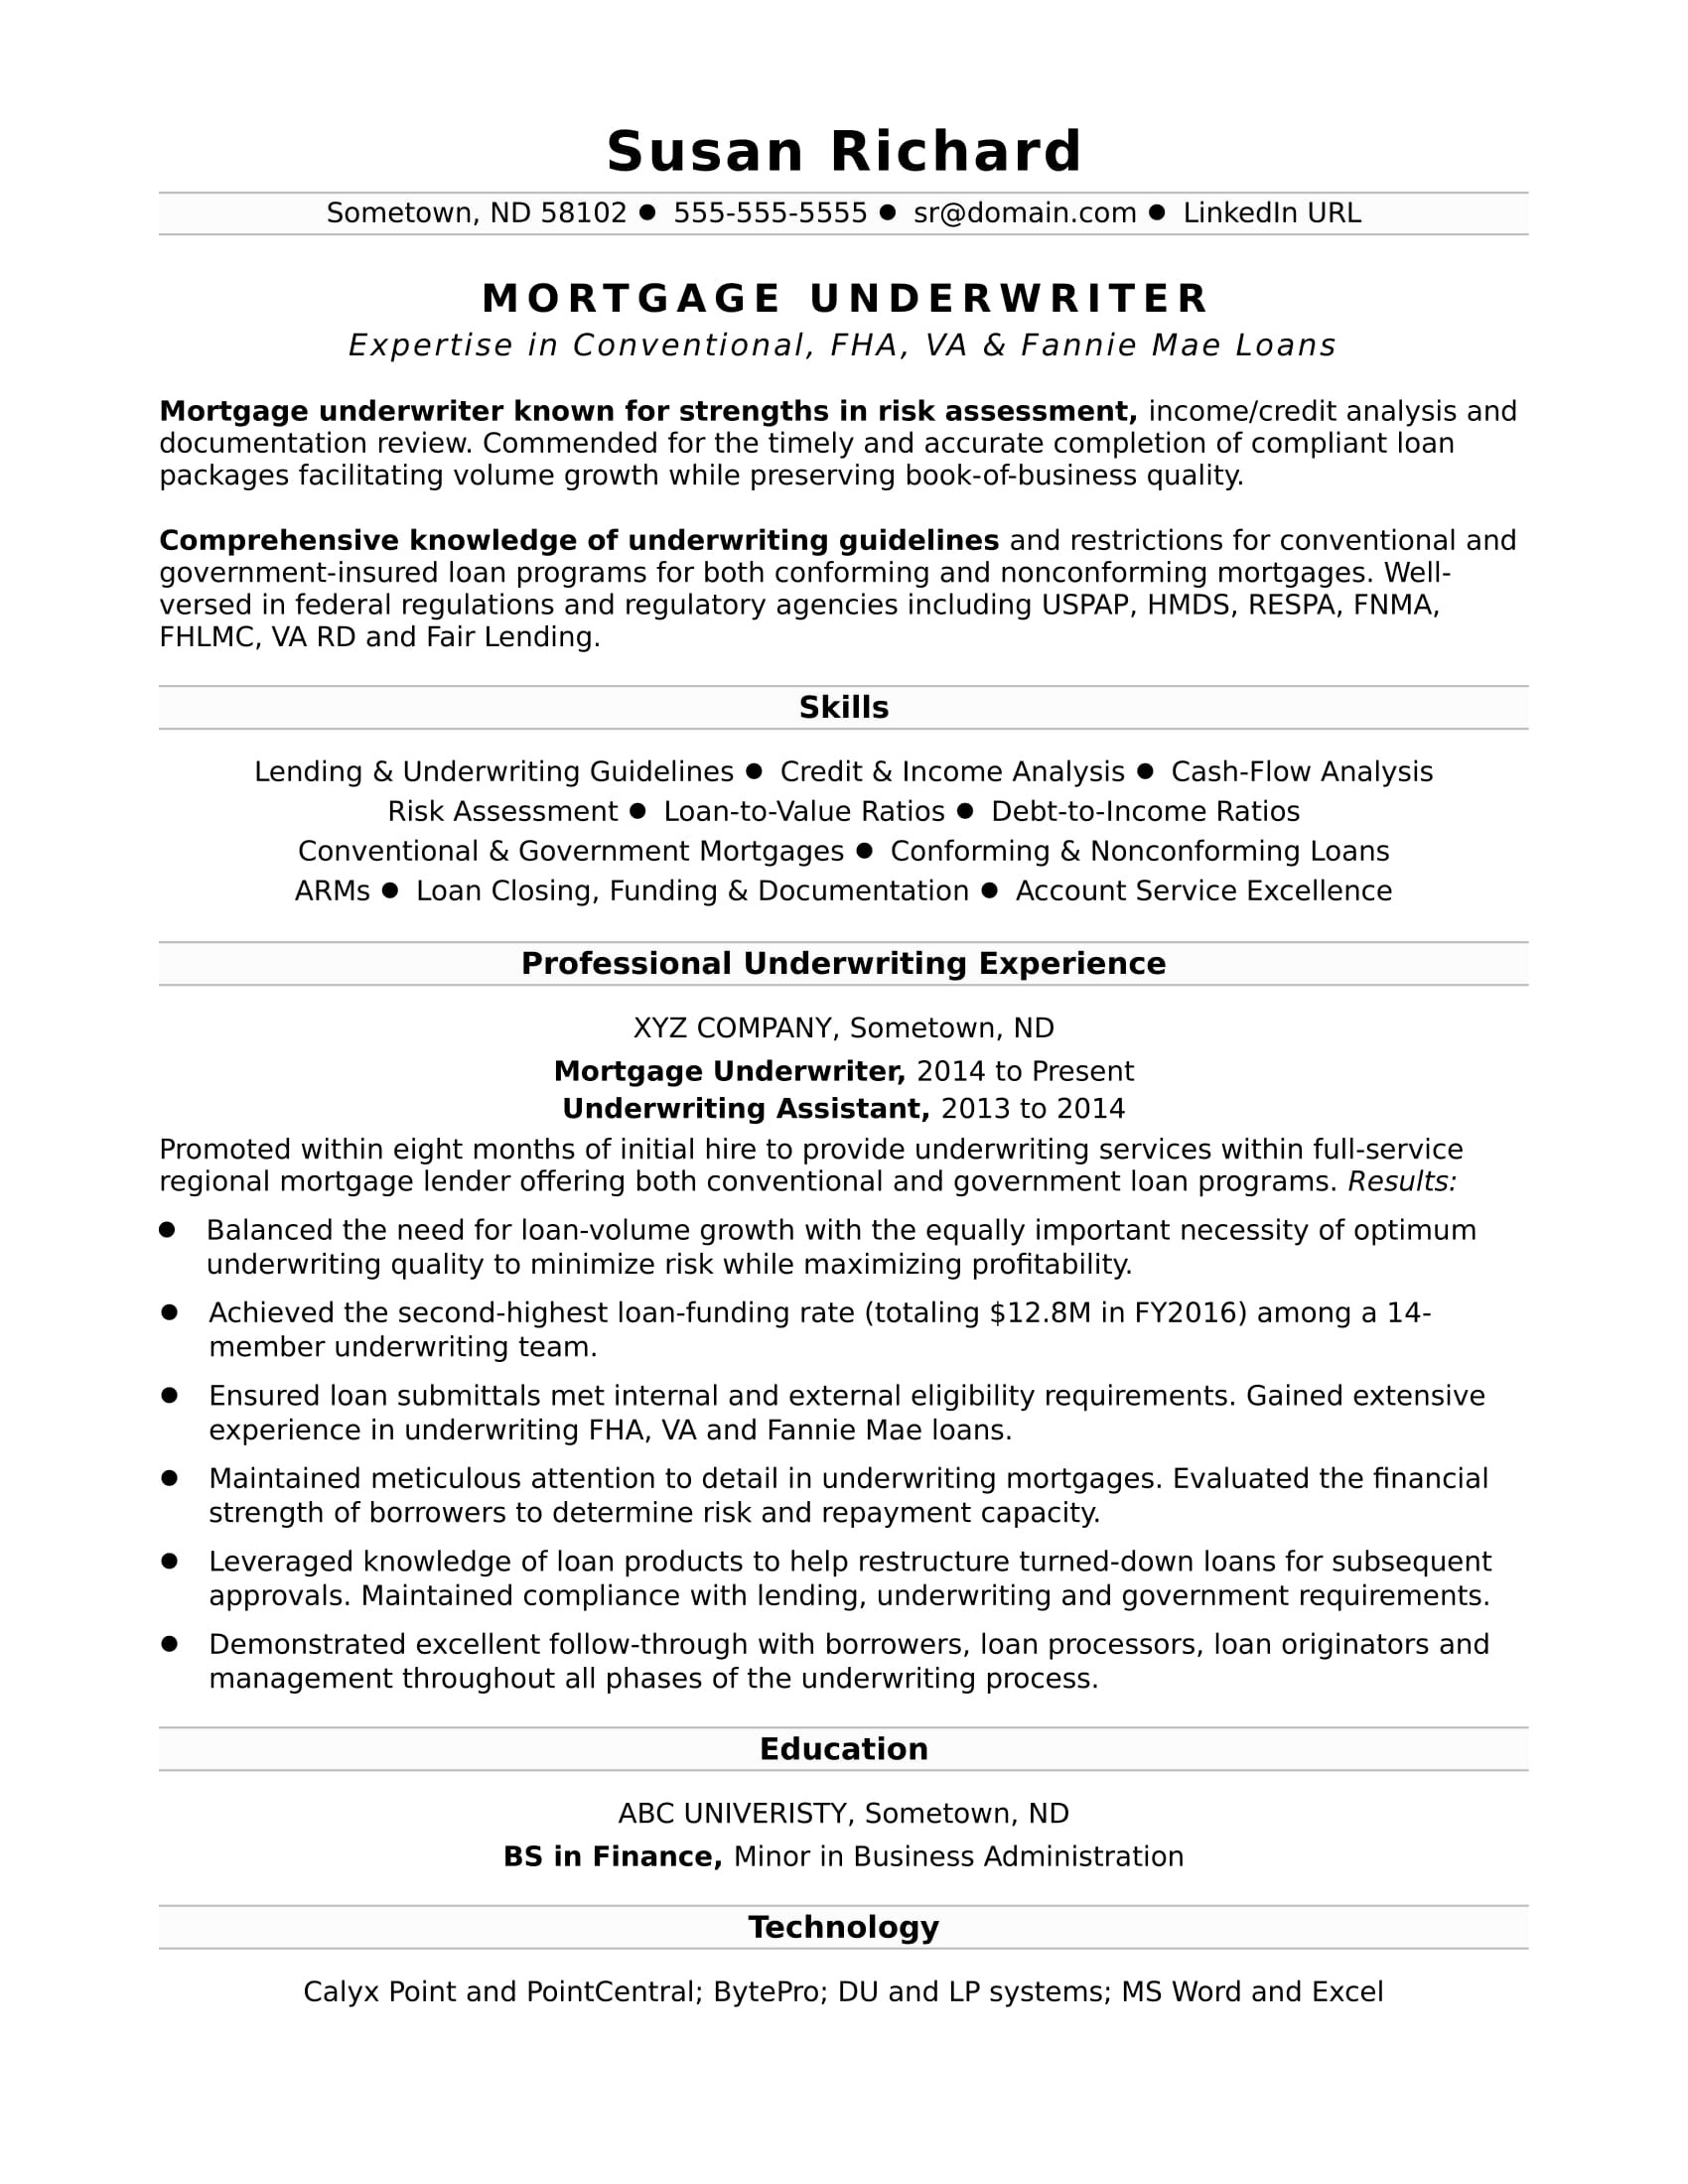 Samples Of Objectives On A Resume for Insurane Mortgage Underwriter Resume Sample Monster.com